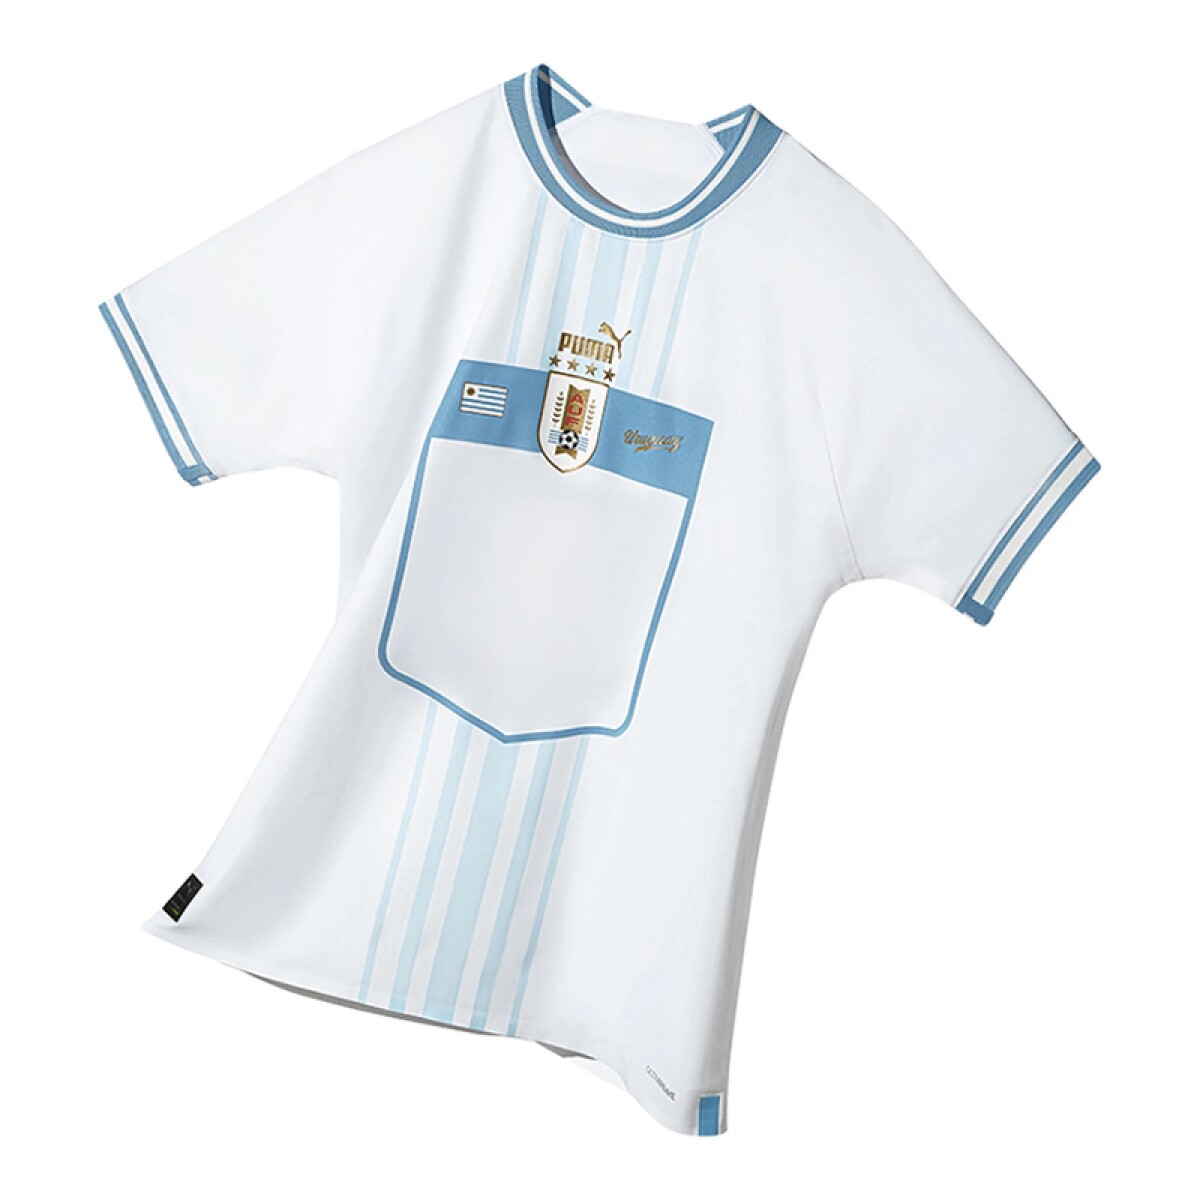 Camiseta Puma Uruguay Away 22 Blanca - S/C 